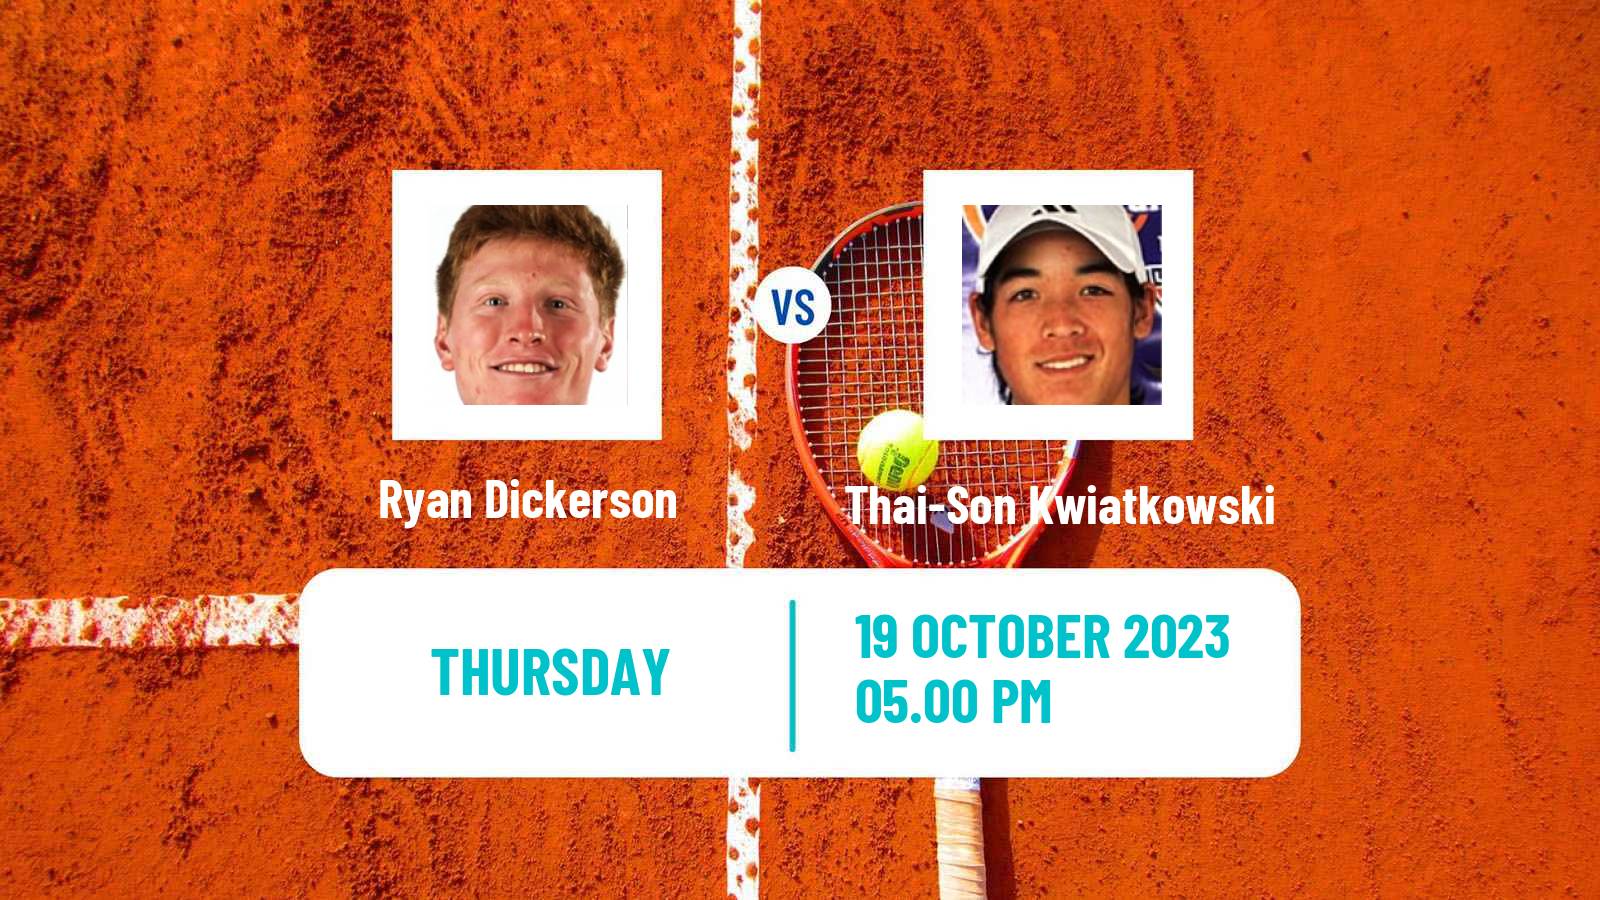 Tennis ITF M15 Las Vegas Nv Men Ryan Dickerson - Thai-Son Kwiatkowski